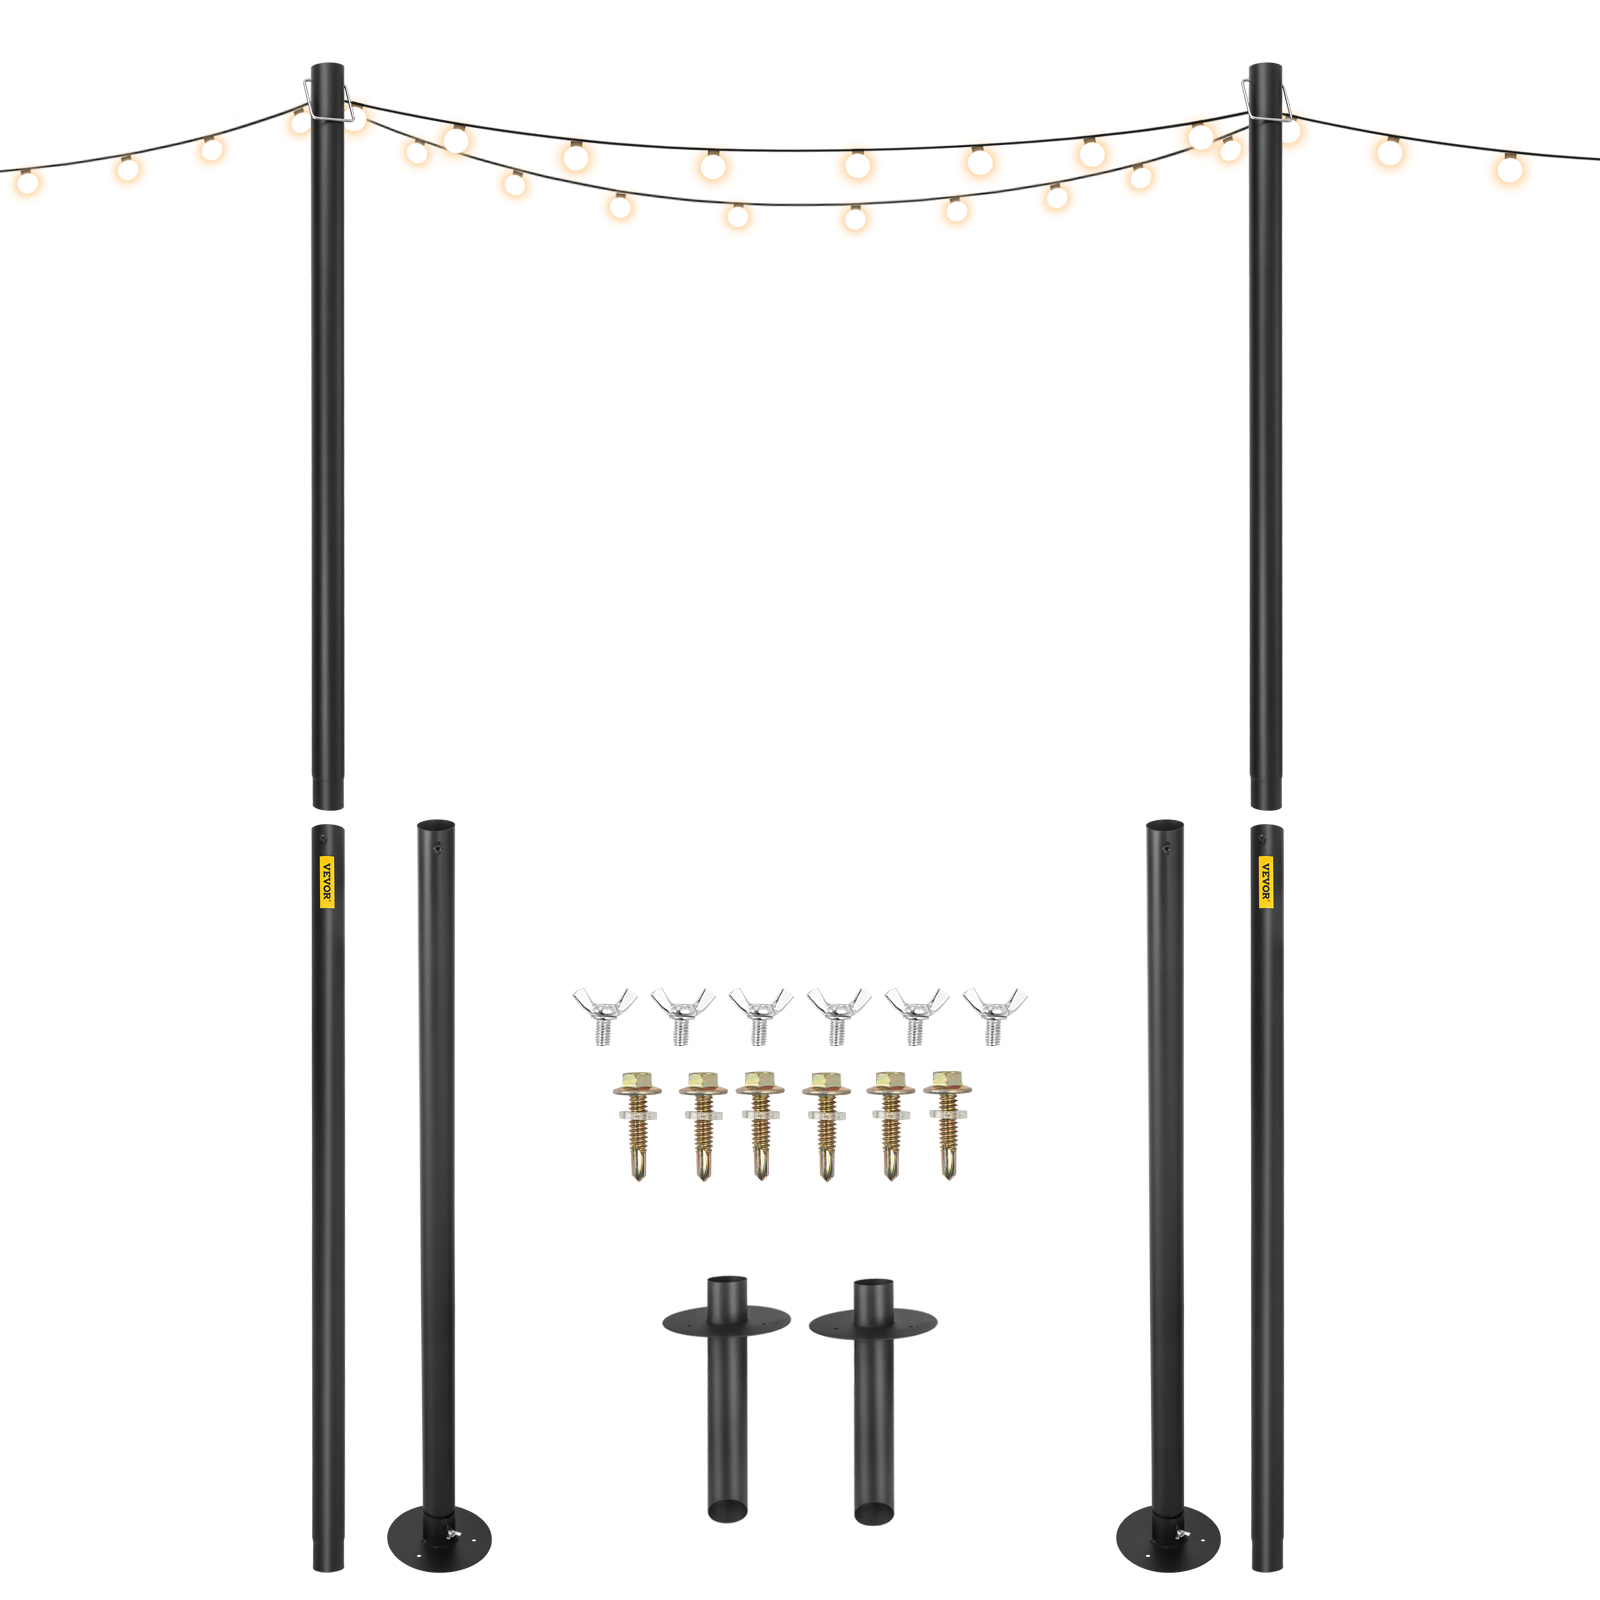 VEVOR String Light Poles, Pack 10.6 FT, Outdoor Powder Coated Steel Lamp  Post with Hooks